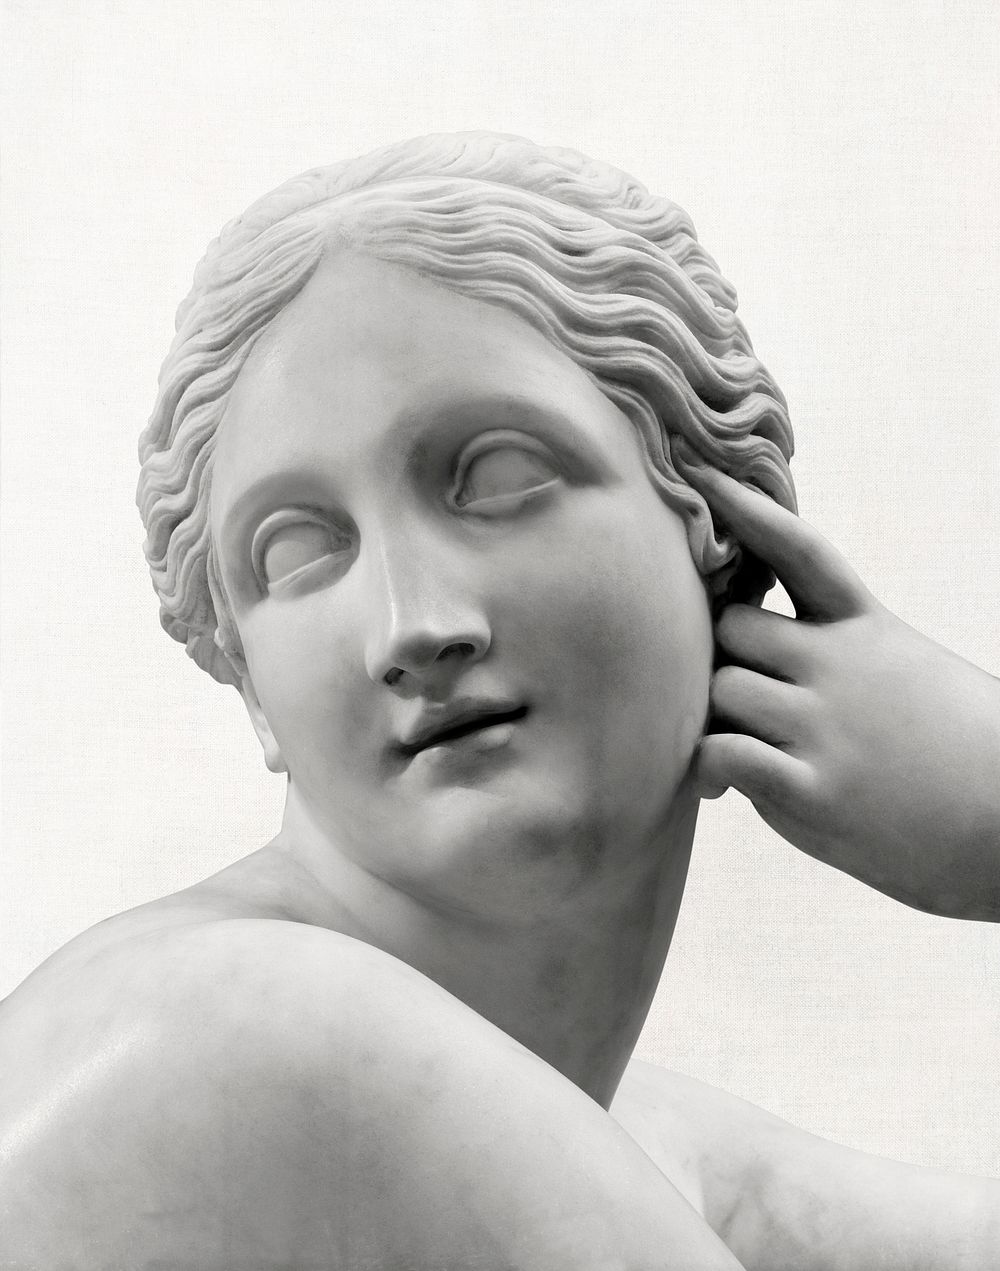 Naiad collage element, Greek sculpture psd, Antonio Canova's artwork remastered by rawpixel